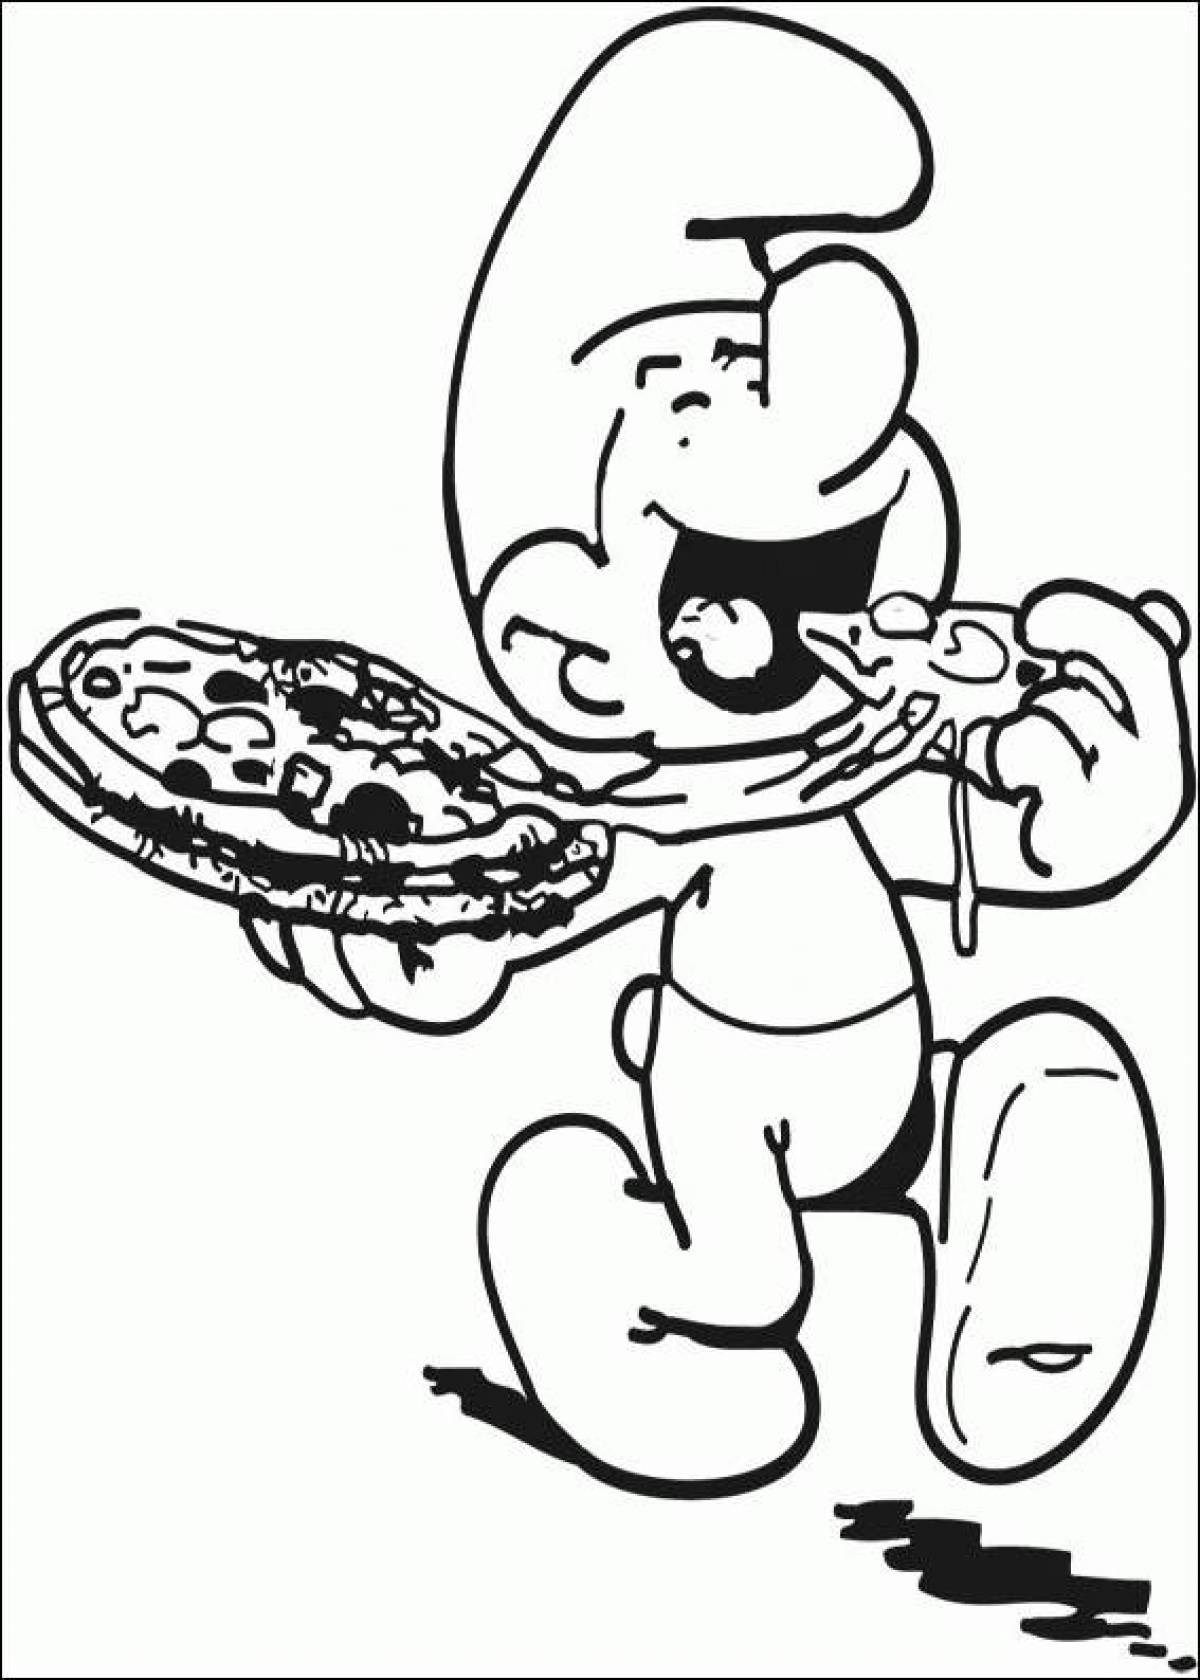 Smurf eats pizza